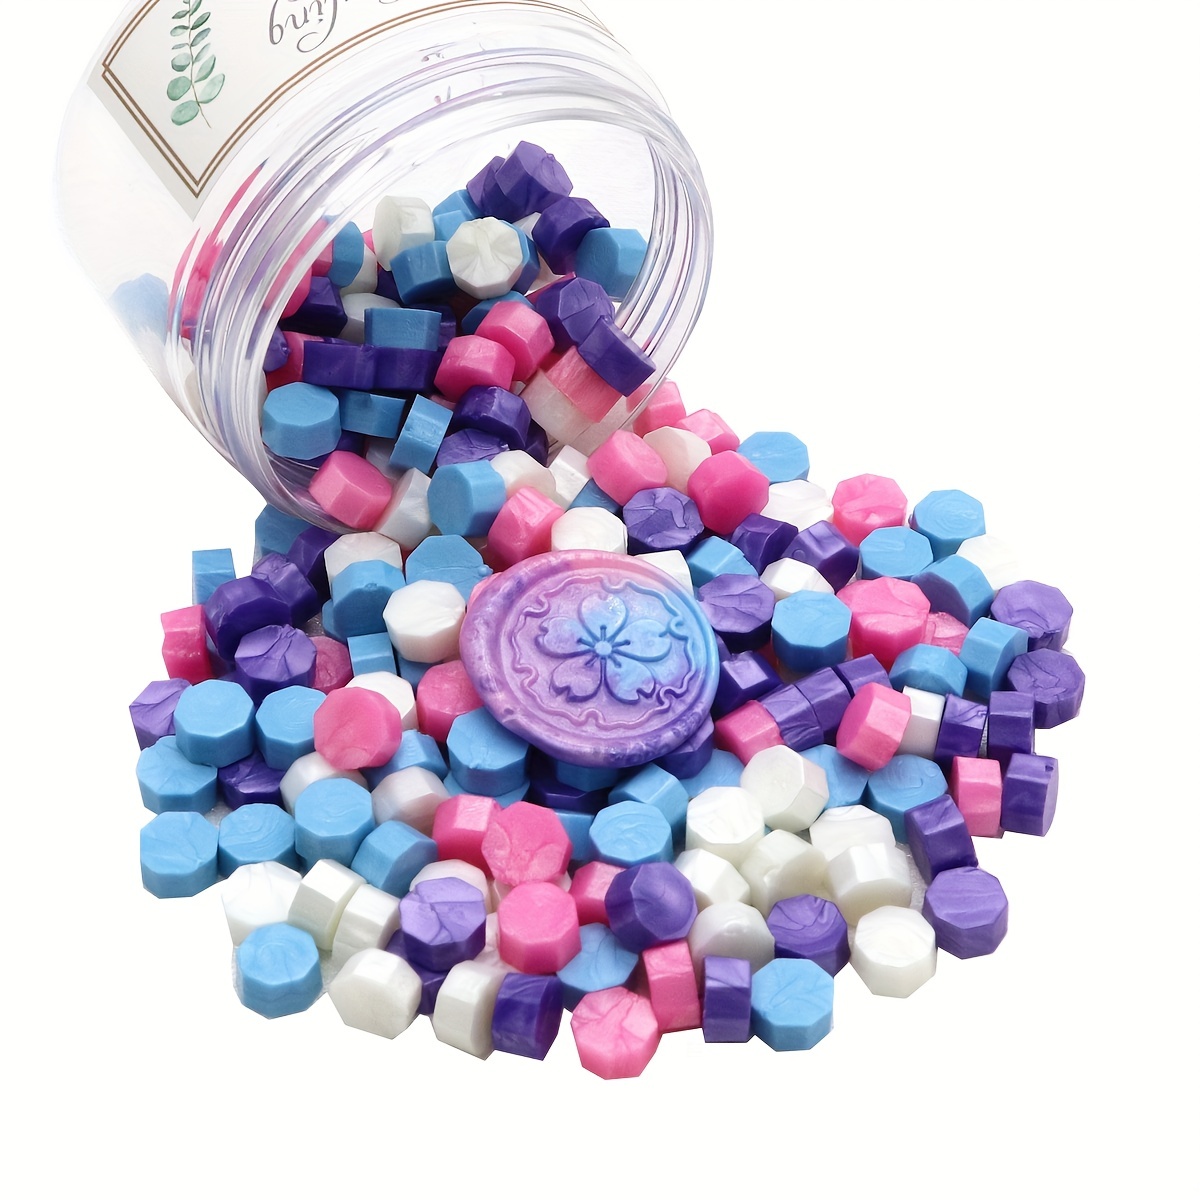 Lavender Sealing Wax Beads (50 Pack)